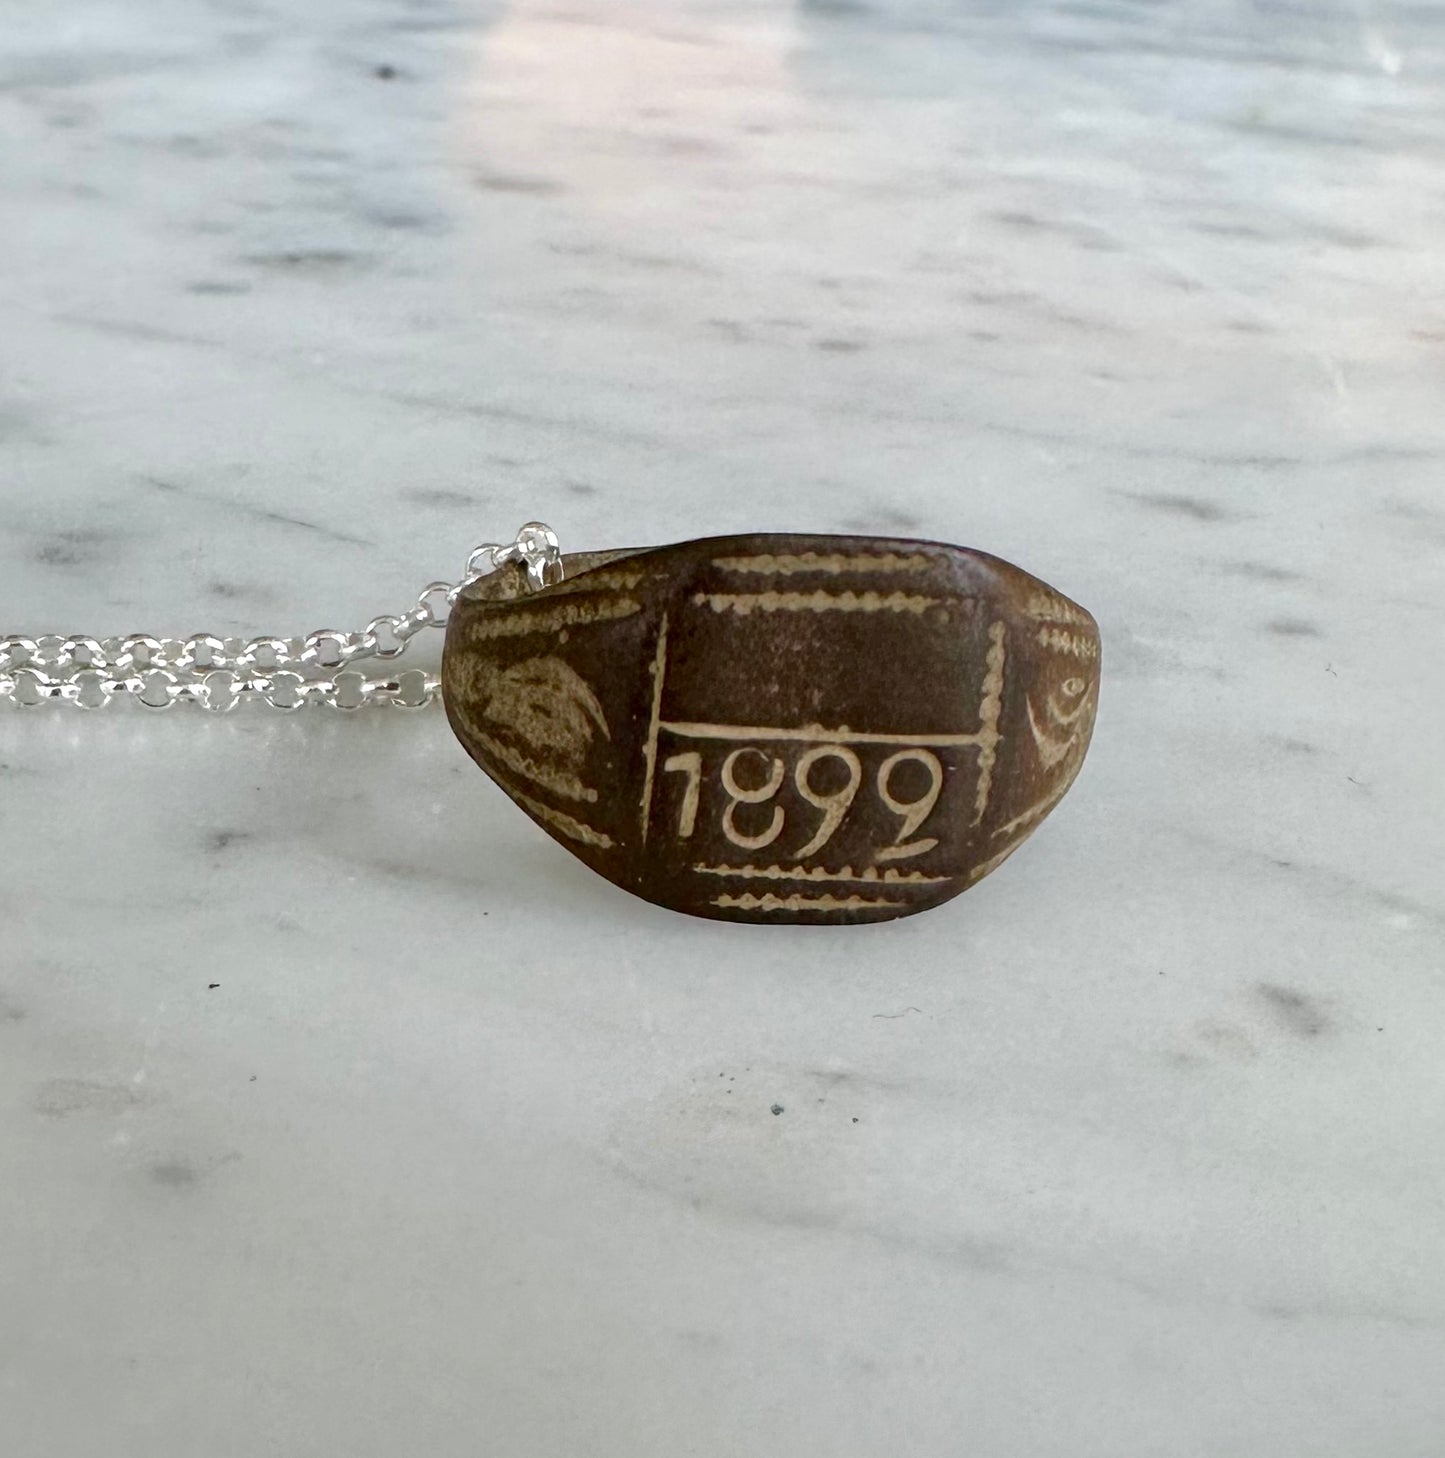 1899 Buried Treasure Necklace